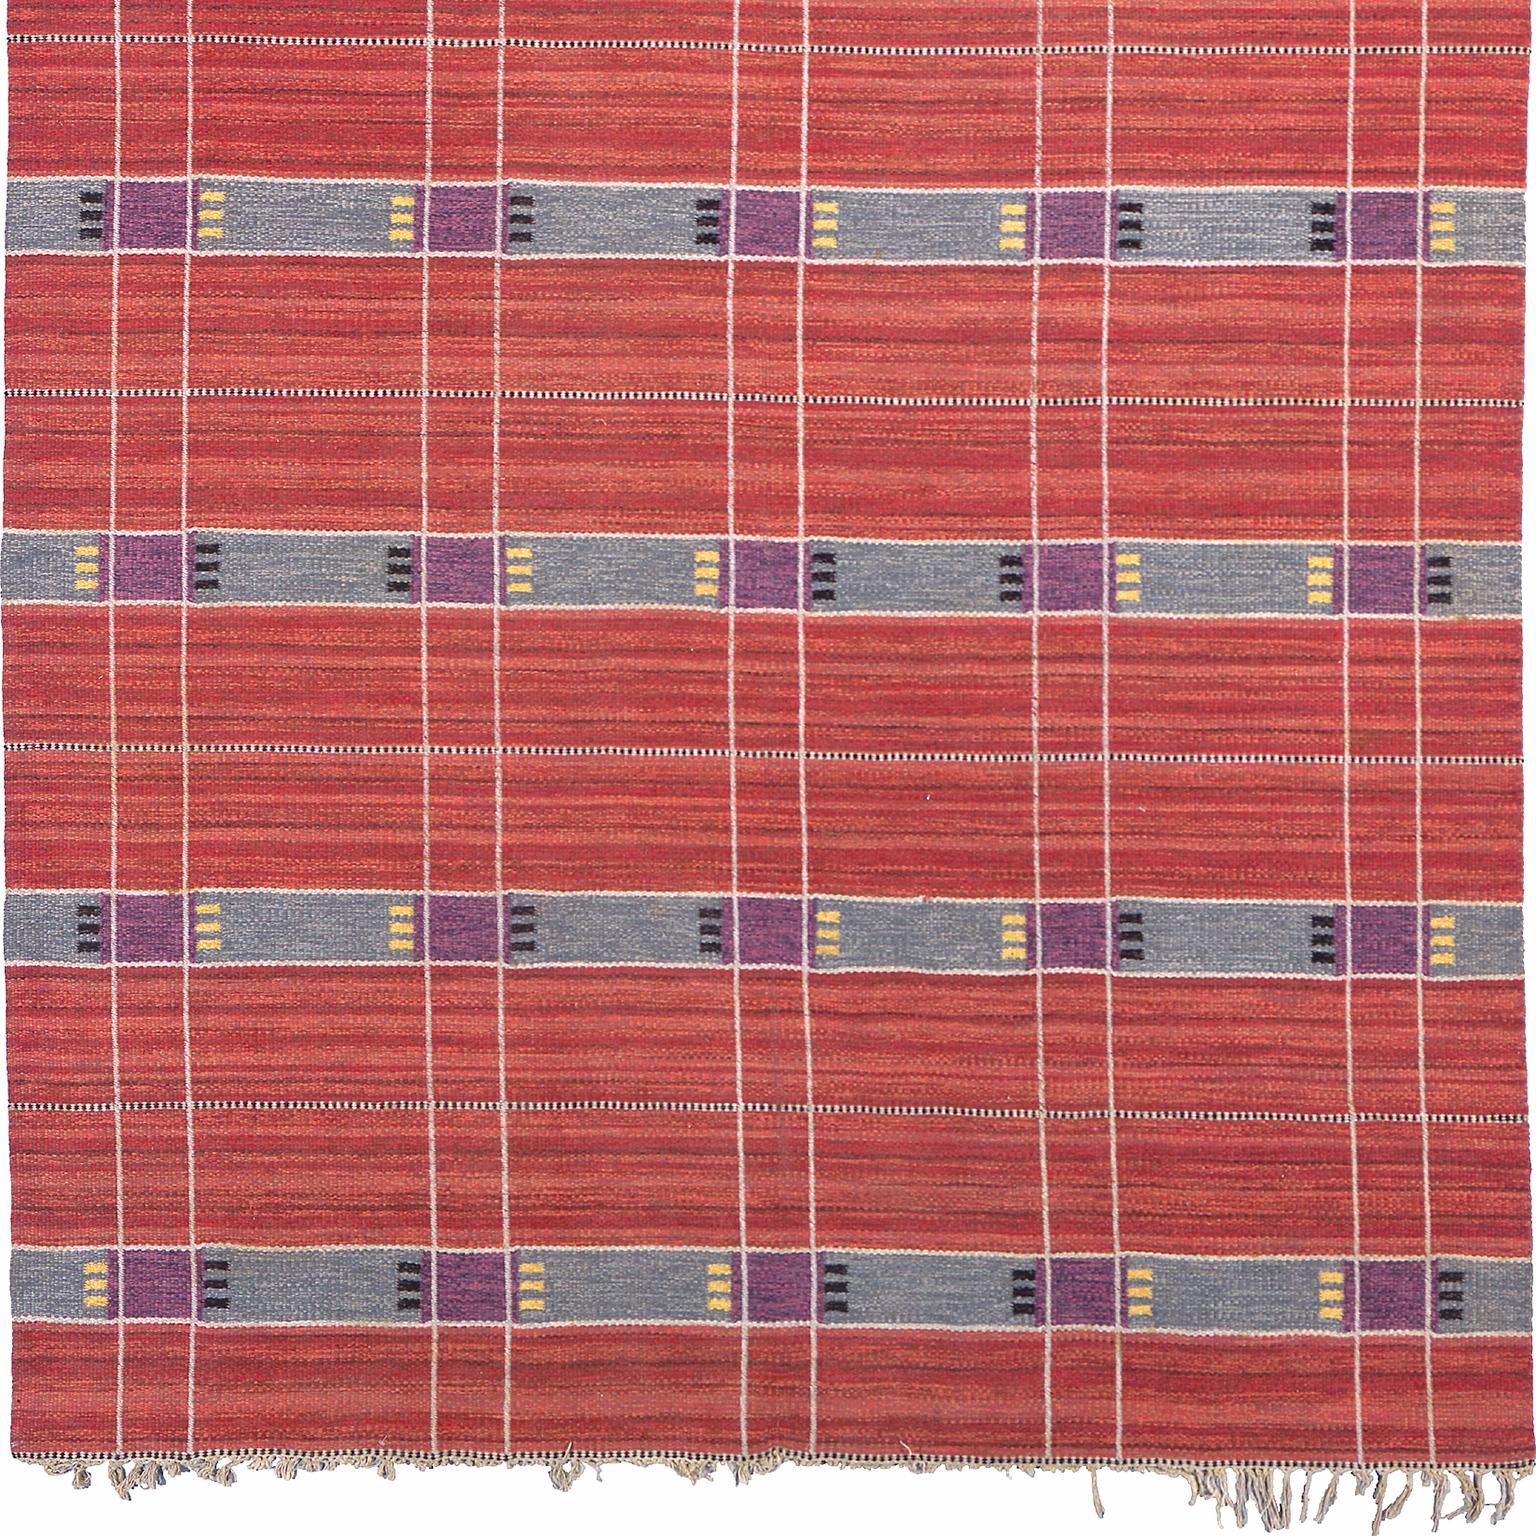 Swedish flat-weave Rug
Sweden, circa 1950
Handwoven.
 